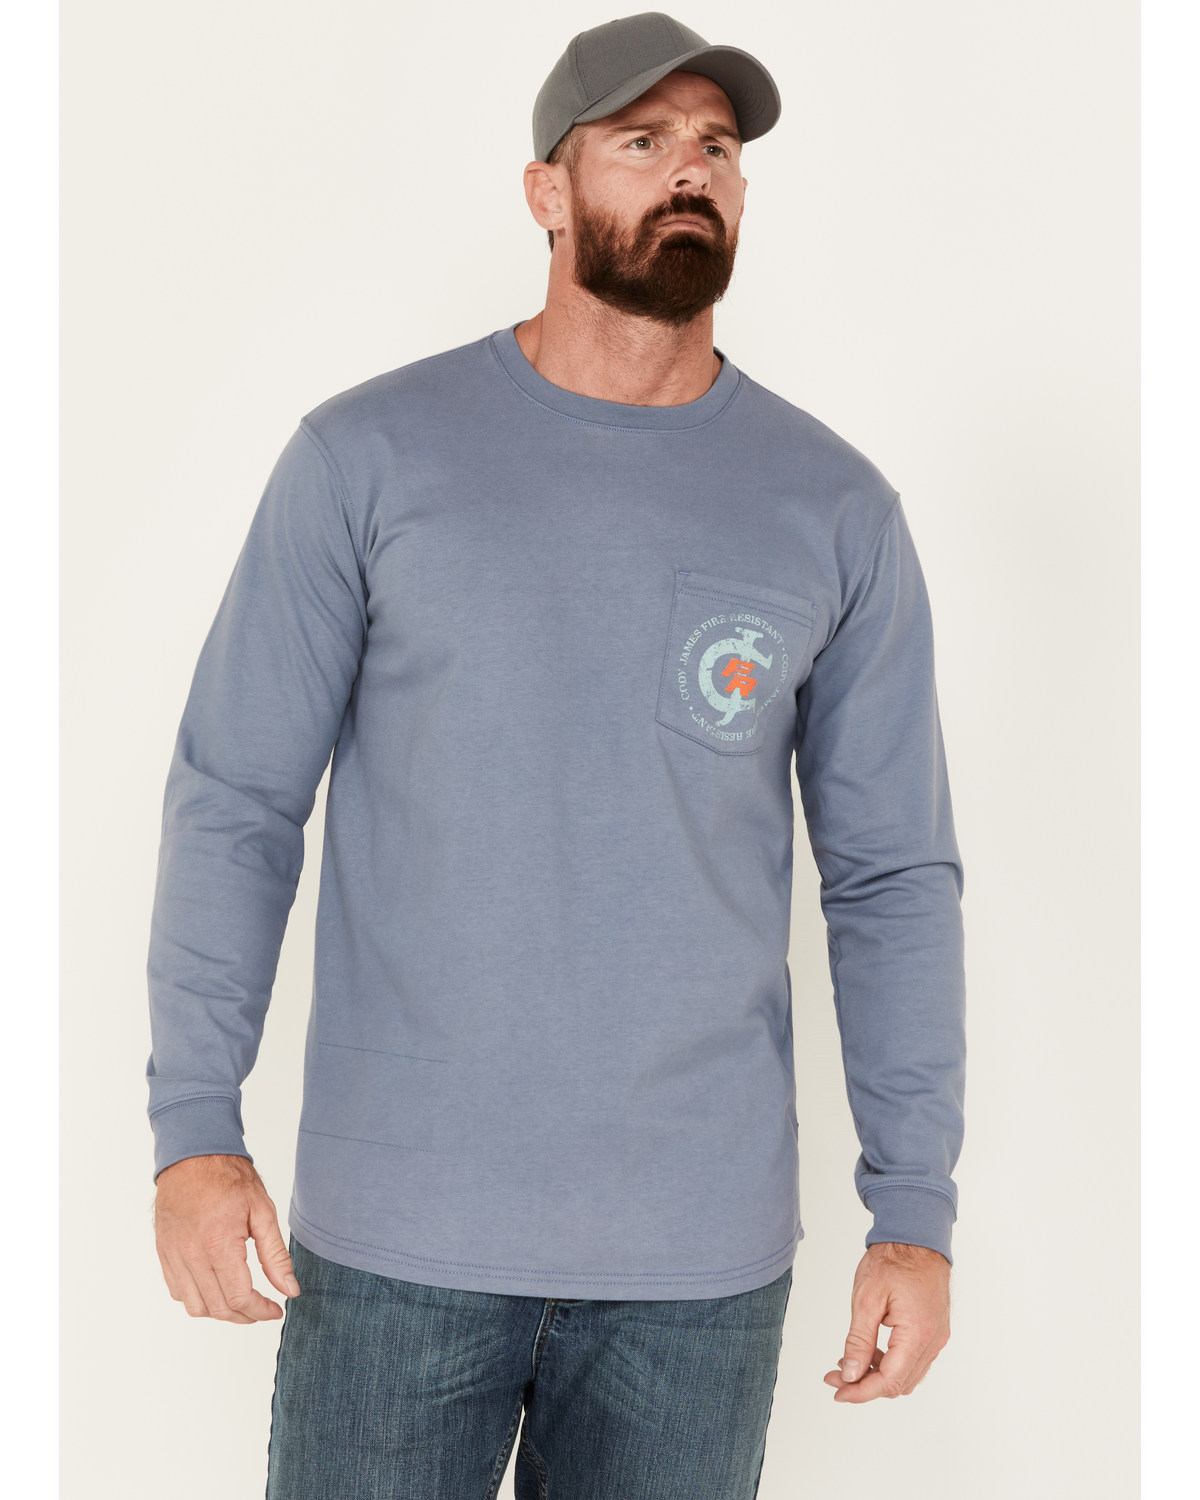 Cody James Men's FR Long Sleeve Pocket Graphic Work T-Shirt